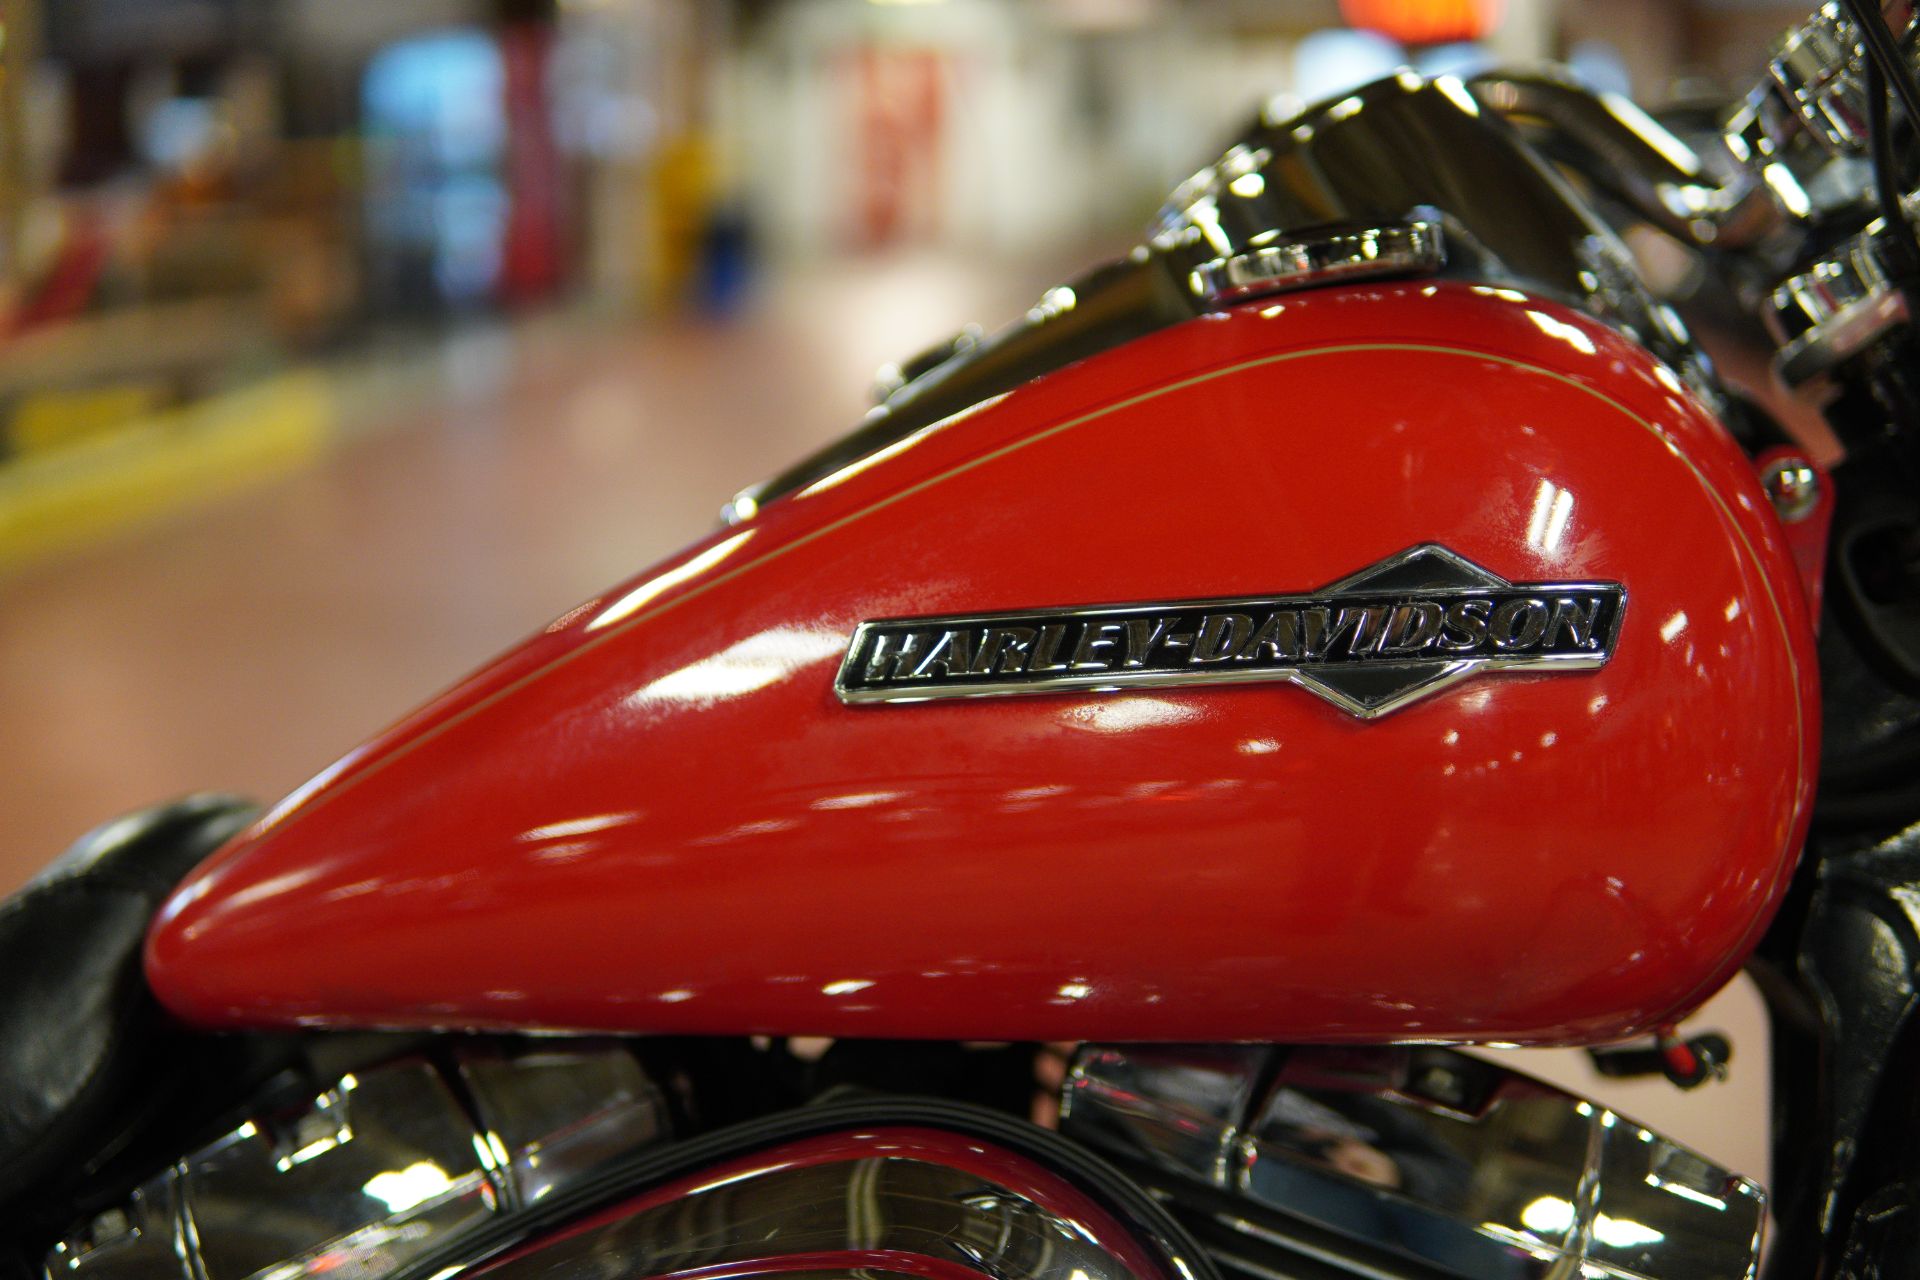 2011 Harley-Davidson Dyna® Super Glide® Custom in New London, Connecticut - Photo 9